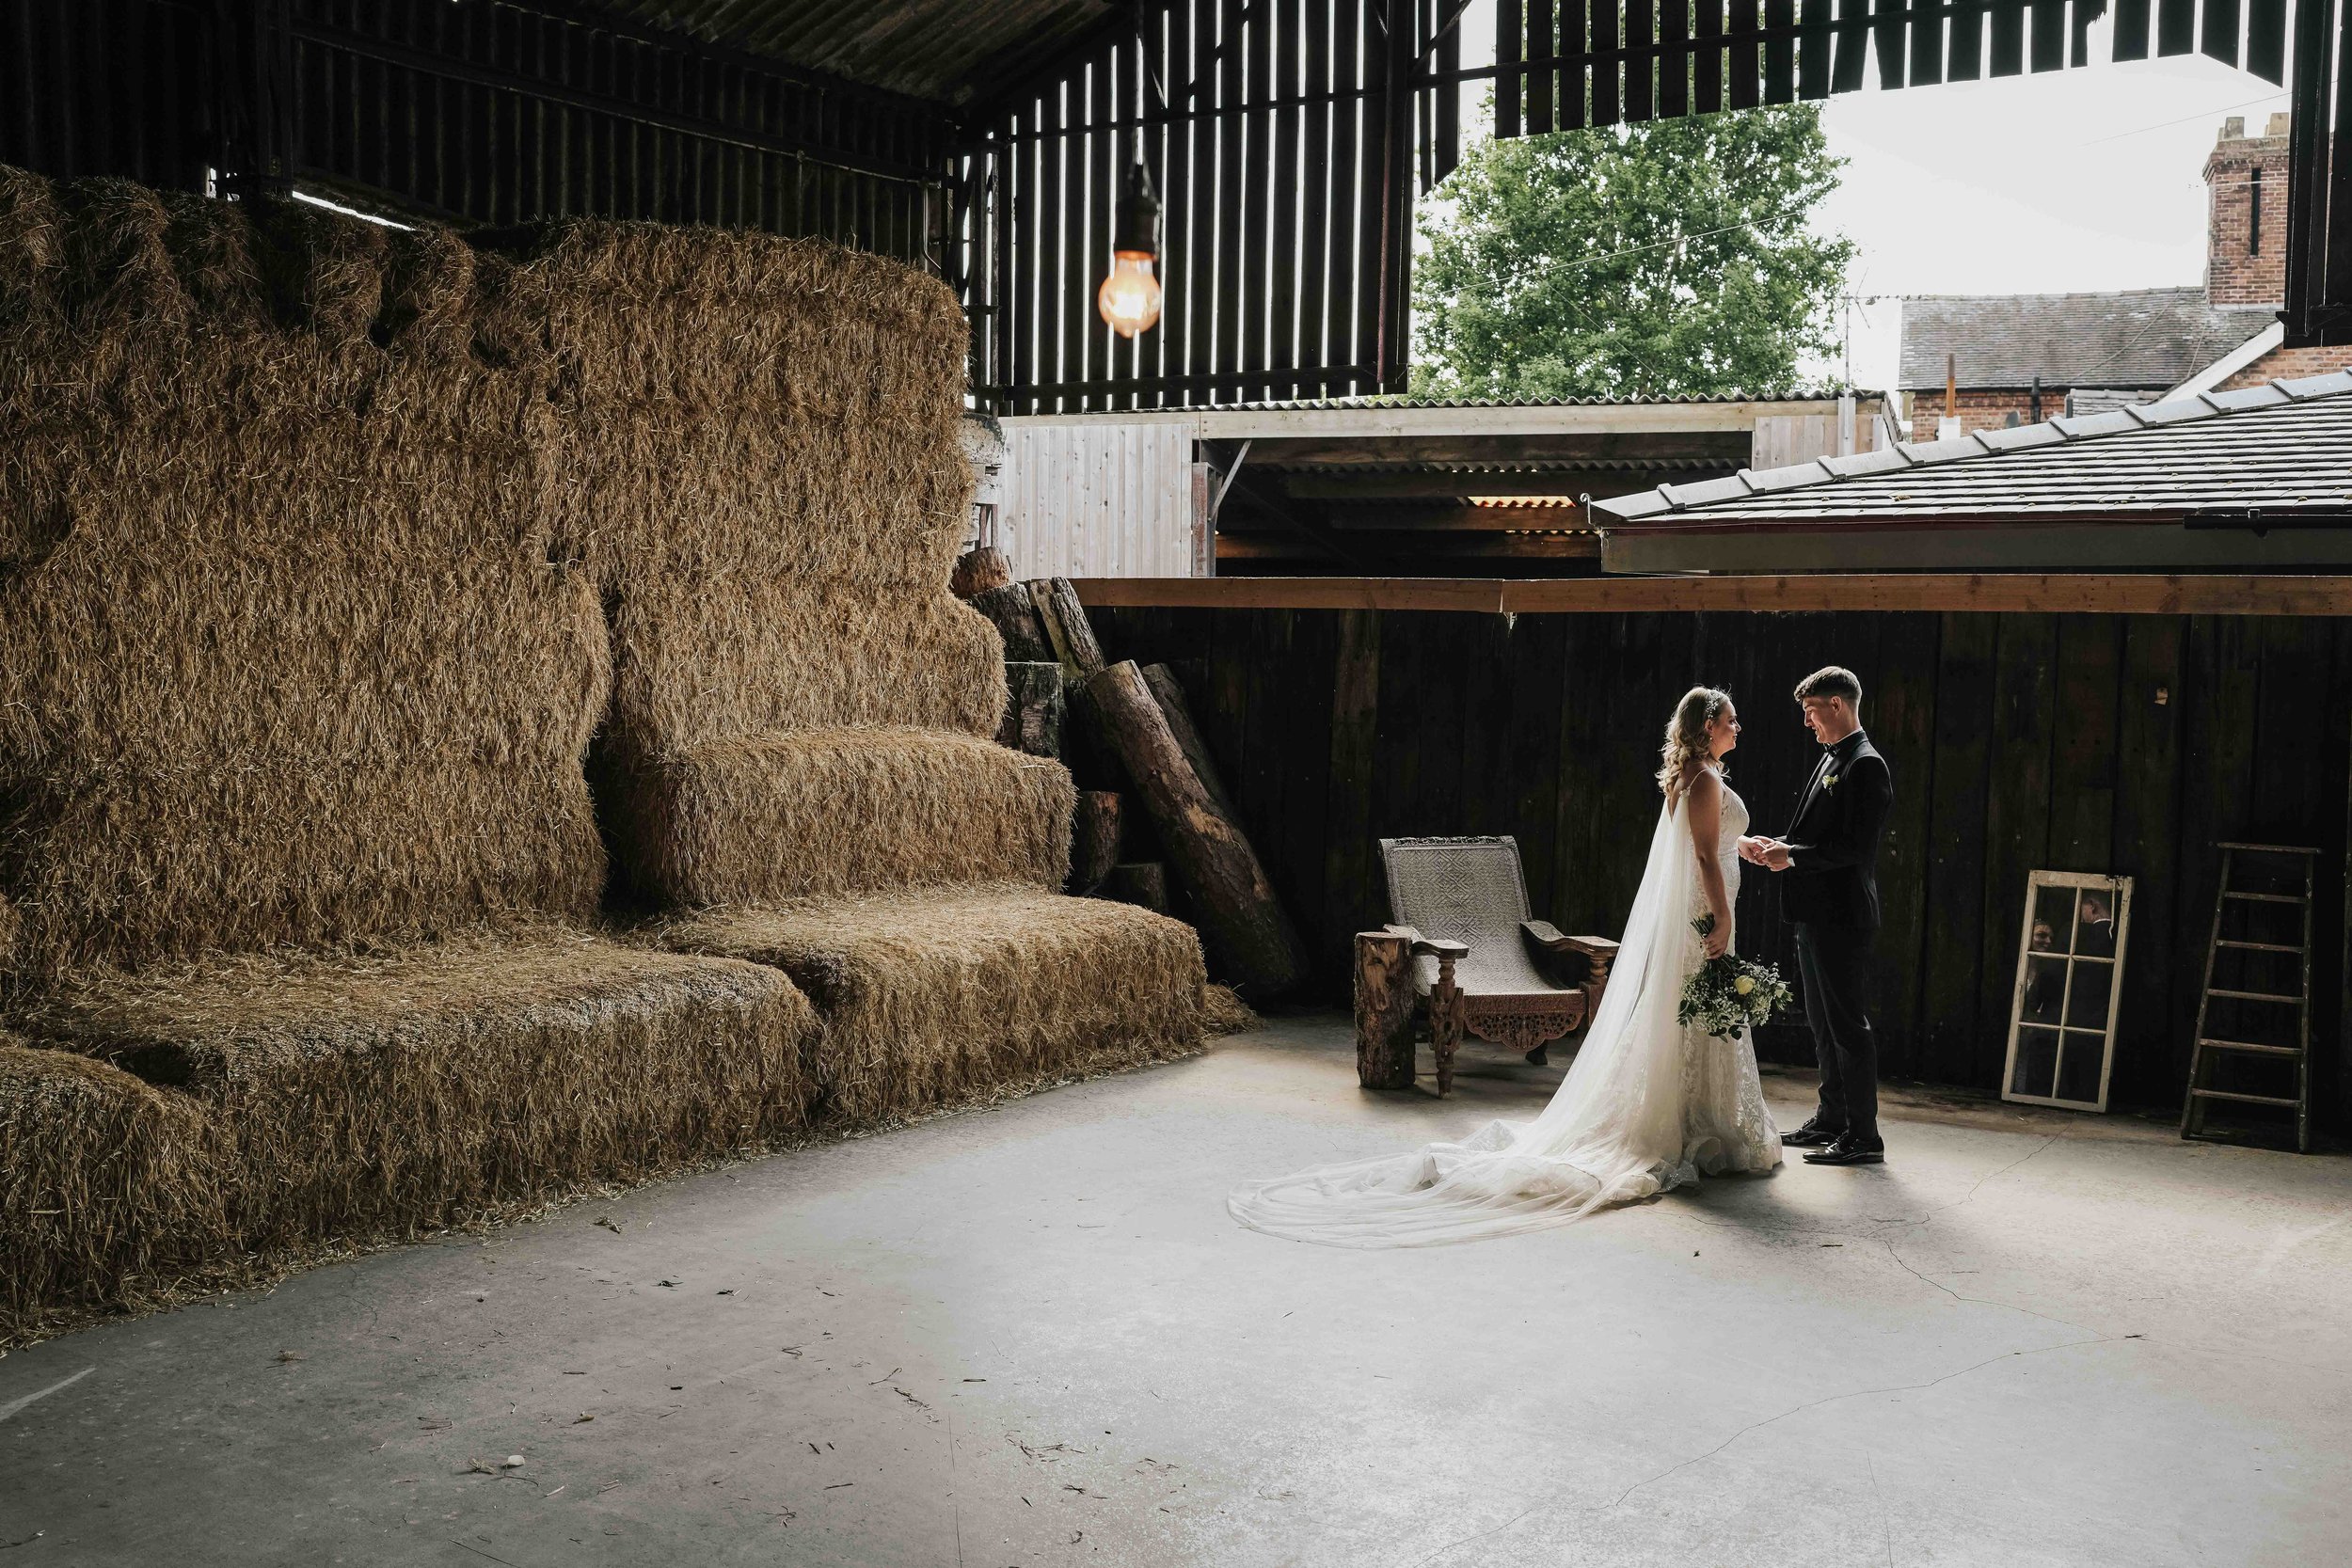 Owen House Wedding Barn Photography Cheshire Wedding Photography - 039.jpg